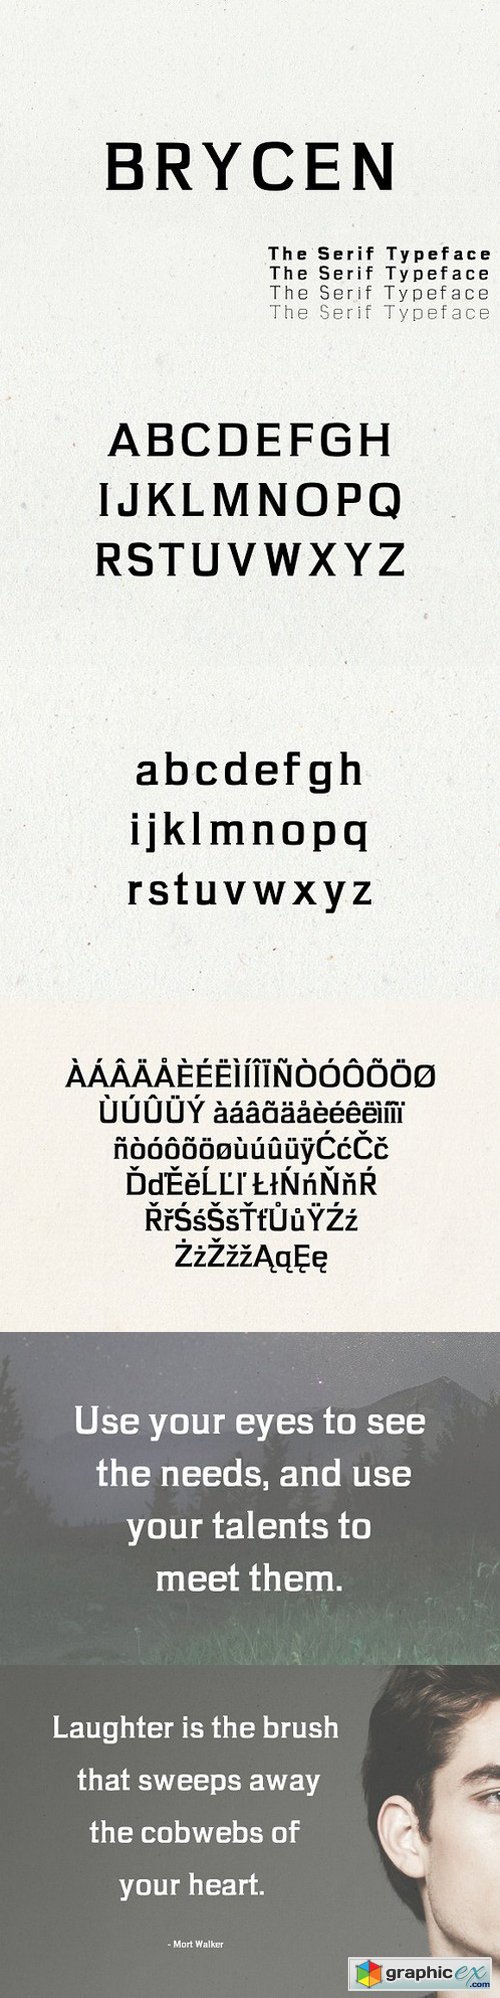 Brycen Serif Premium Font Family